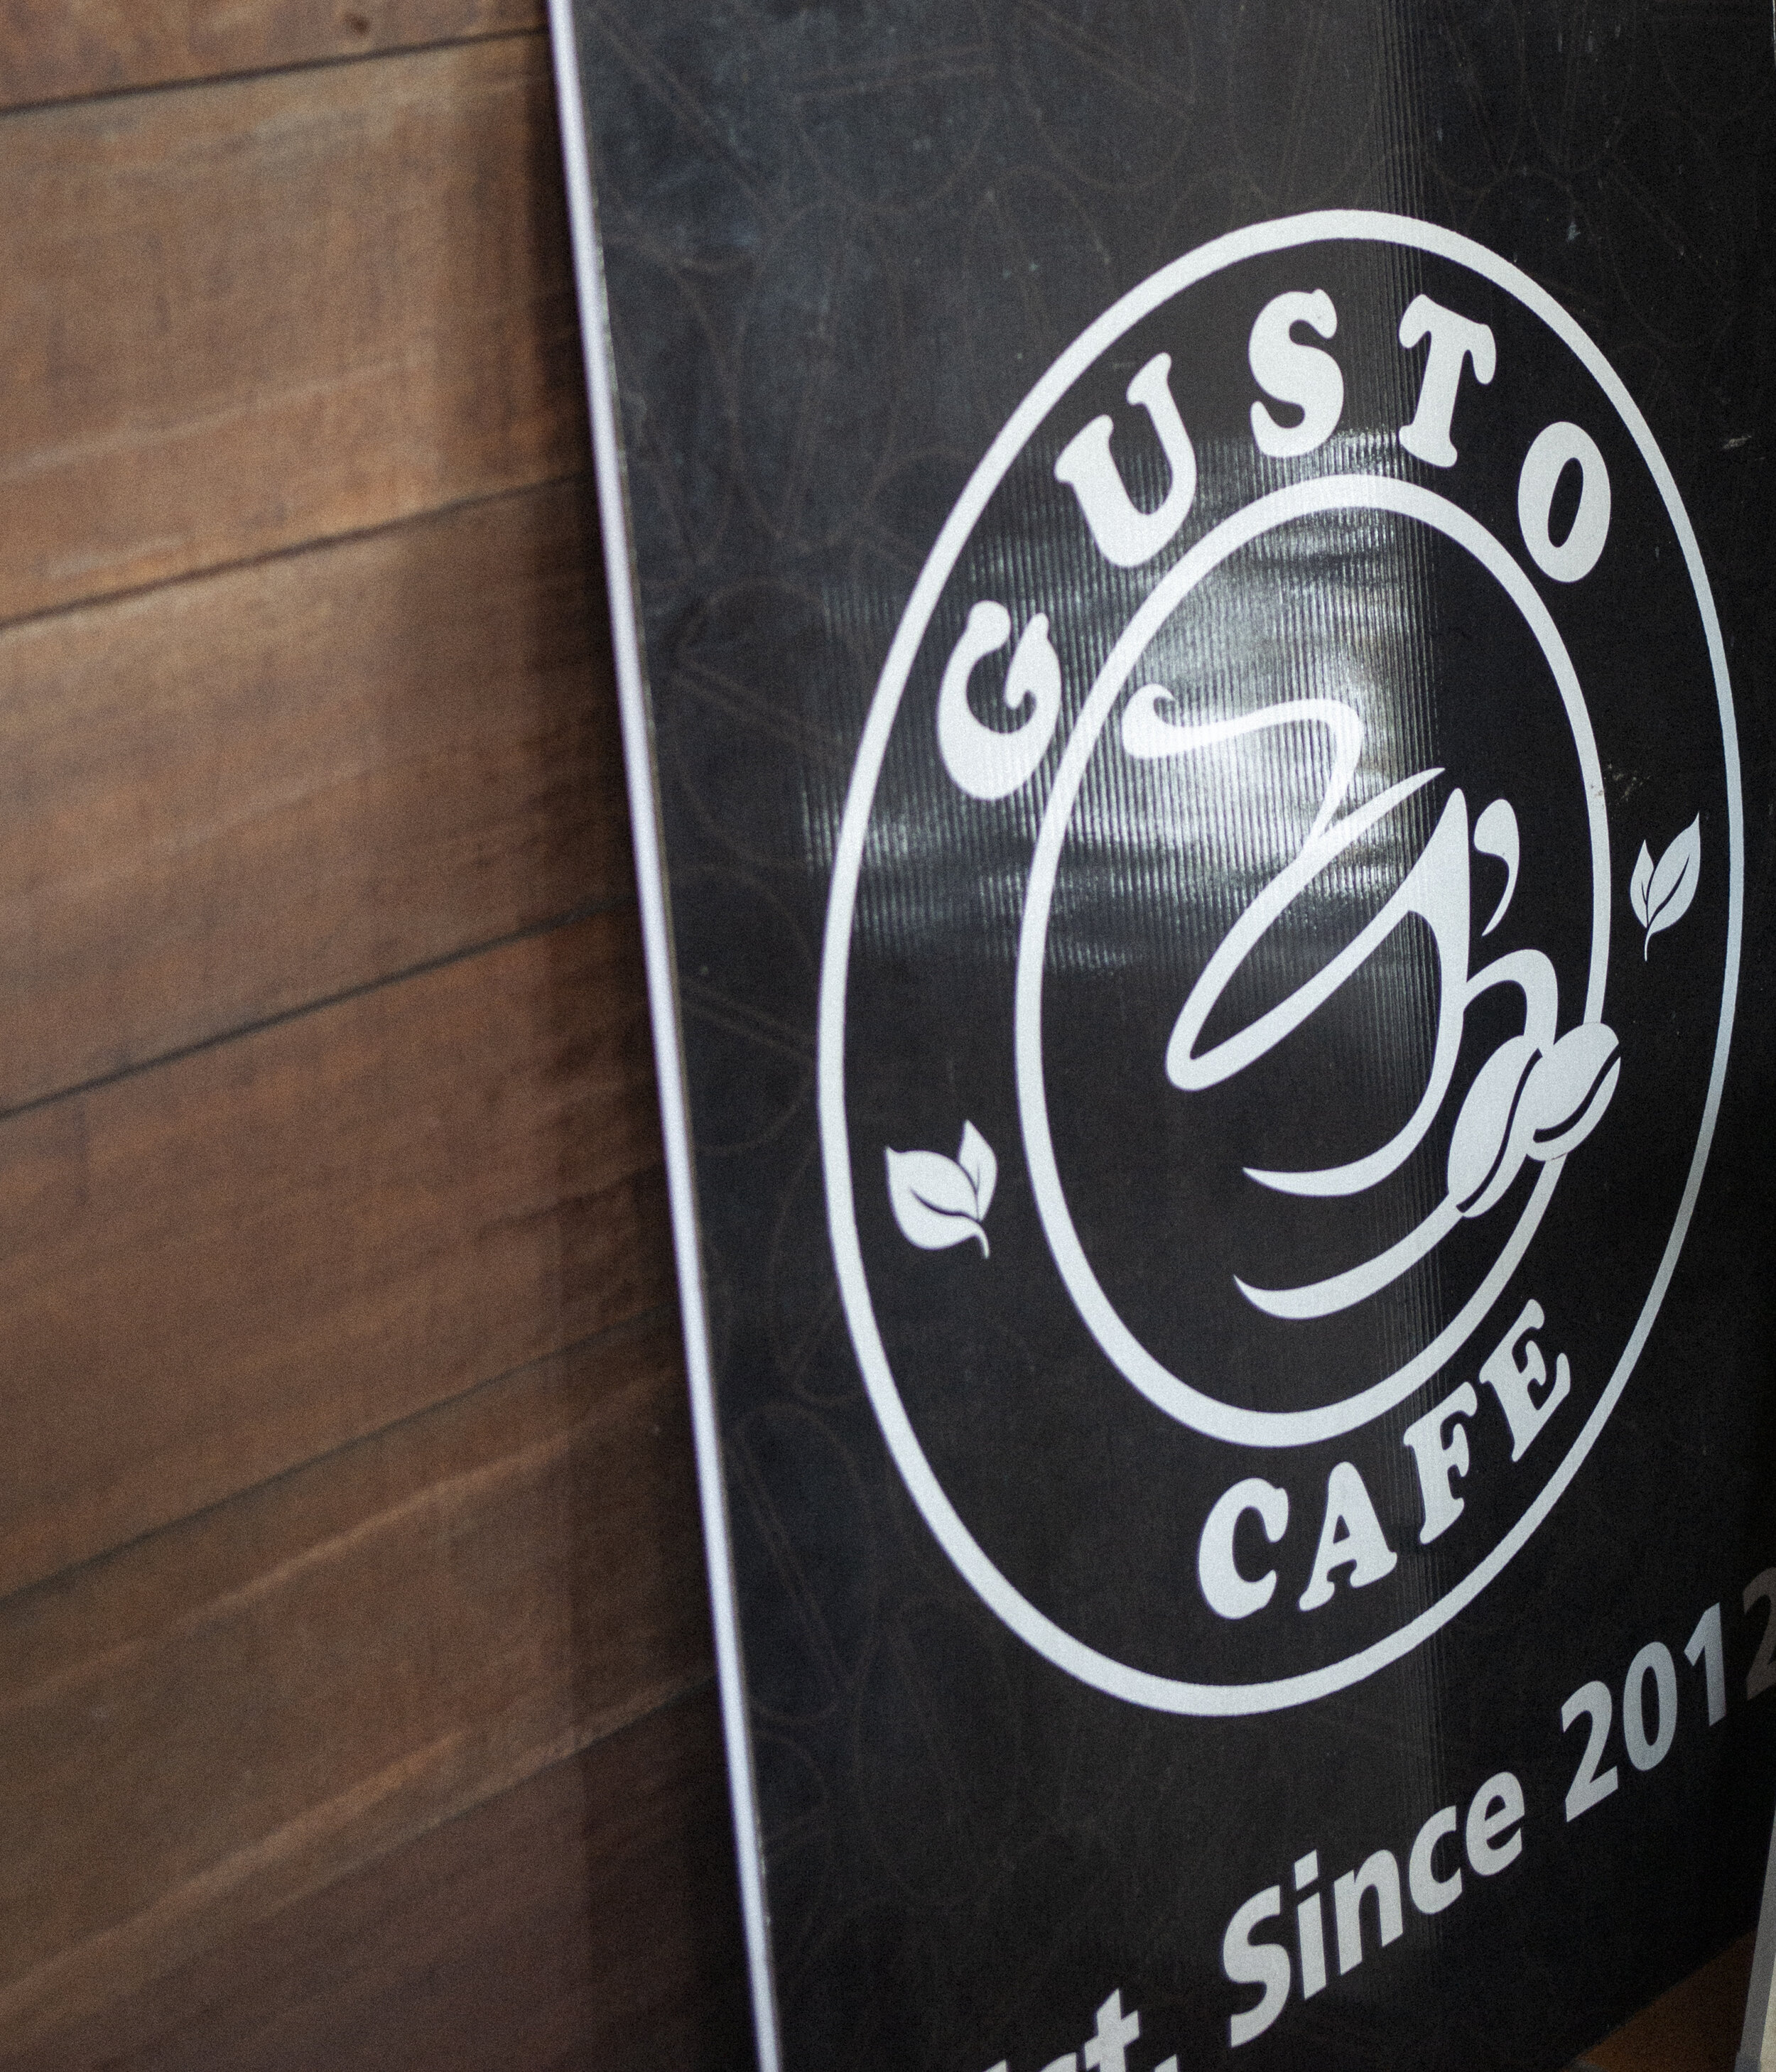 18-4-21_Gusto Cafe - F-15.jpg